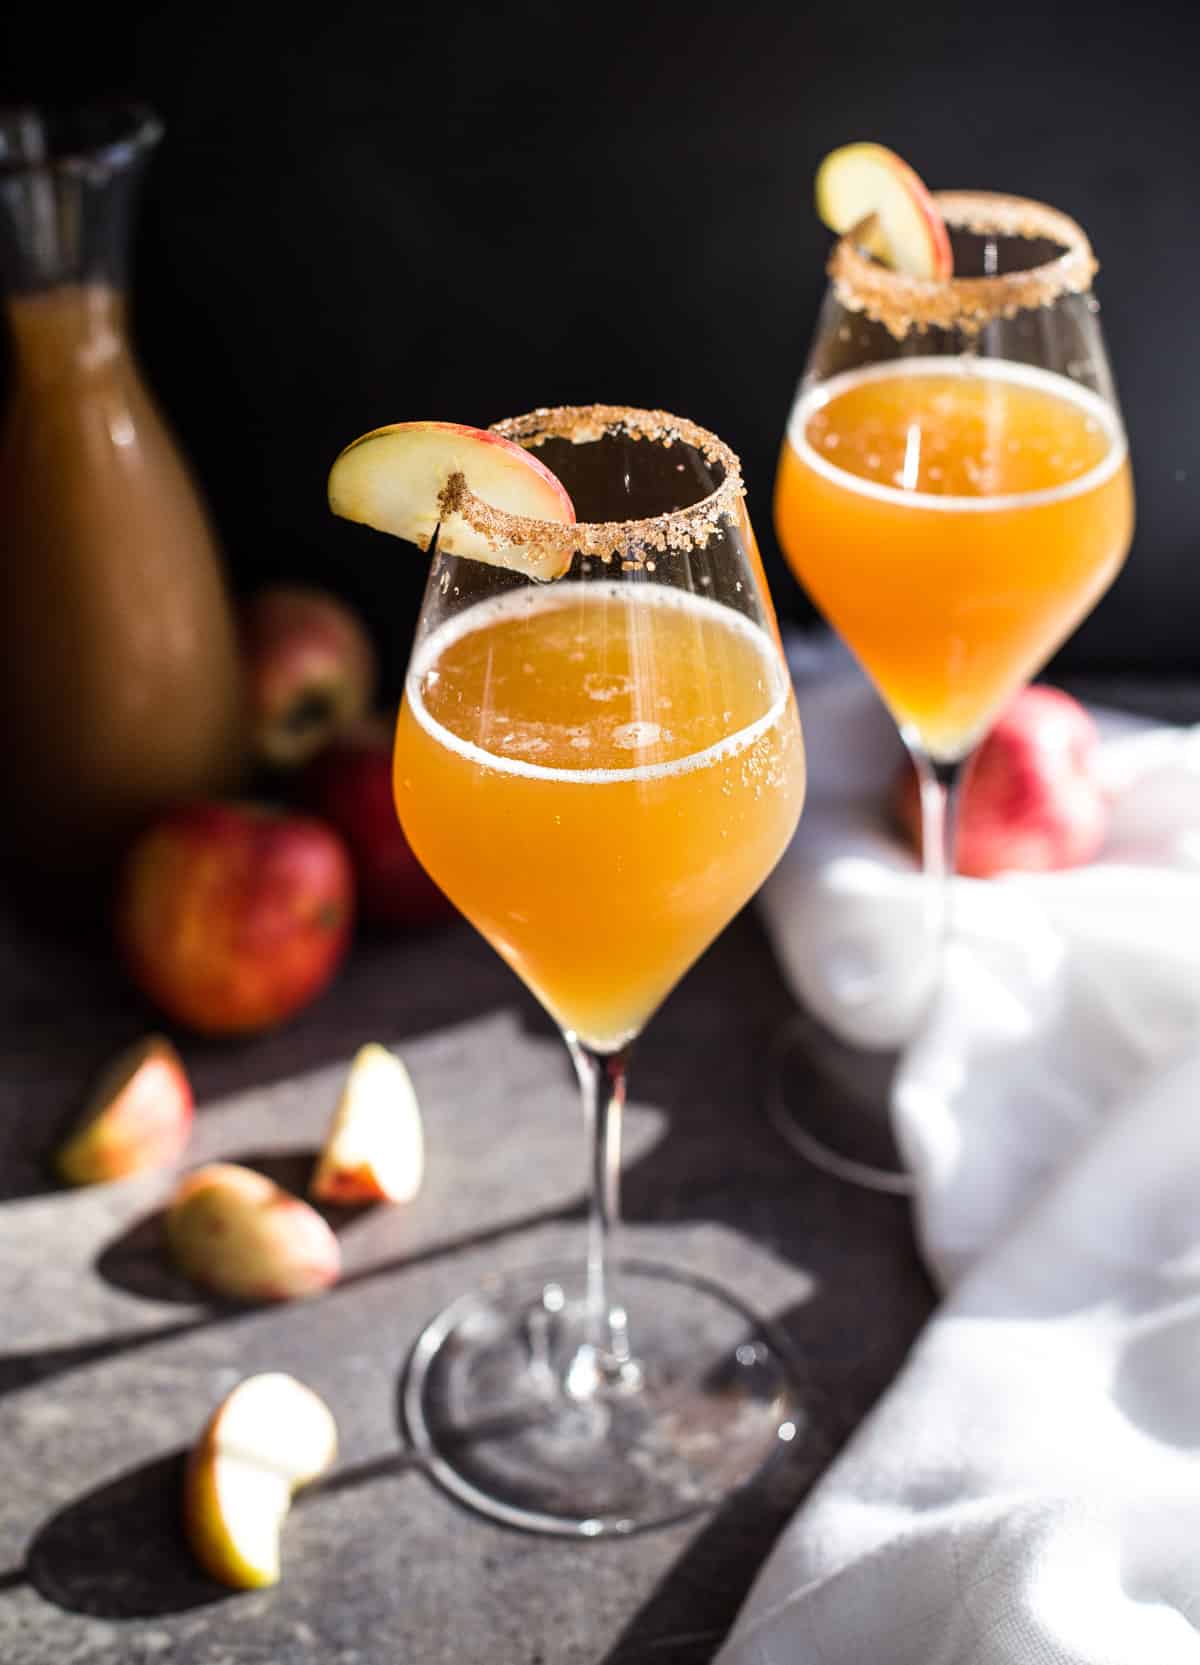 https://www.vindulge.com/wp-content/uploads/2020/11/Apple-Cider-Mimosa.jpg